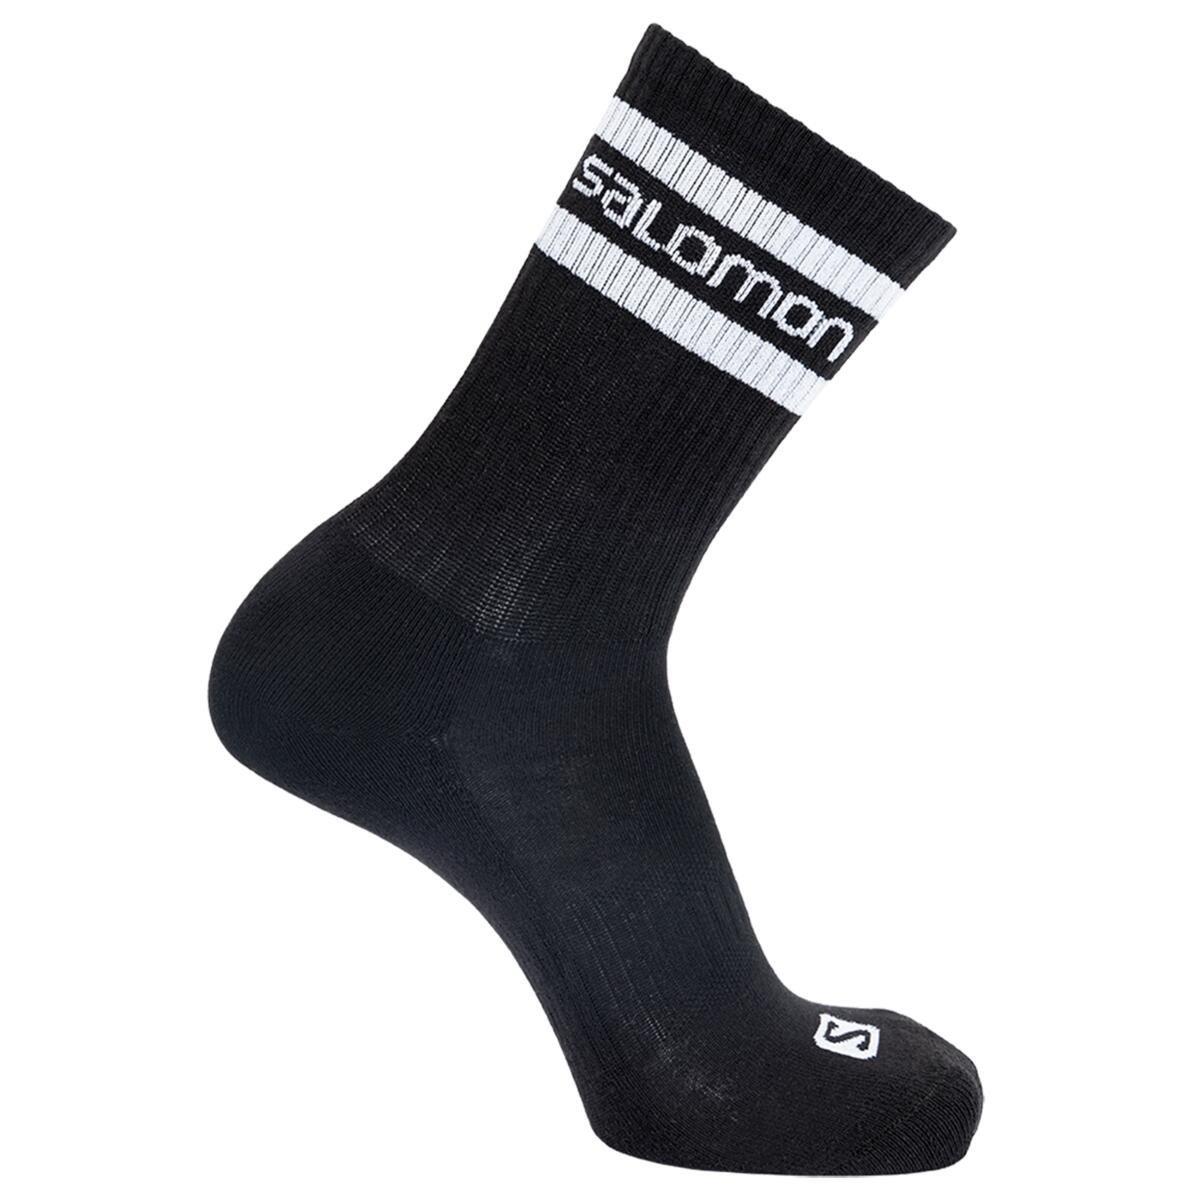 Ponožky Salomon 365 CREW 2-PACK - biela/čierna